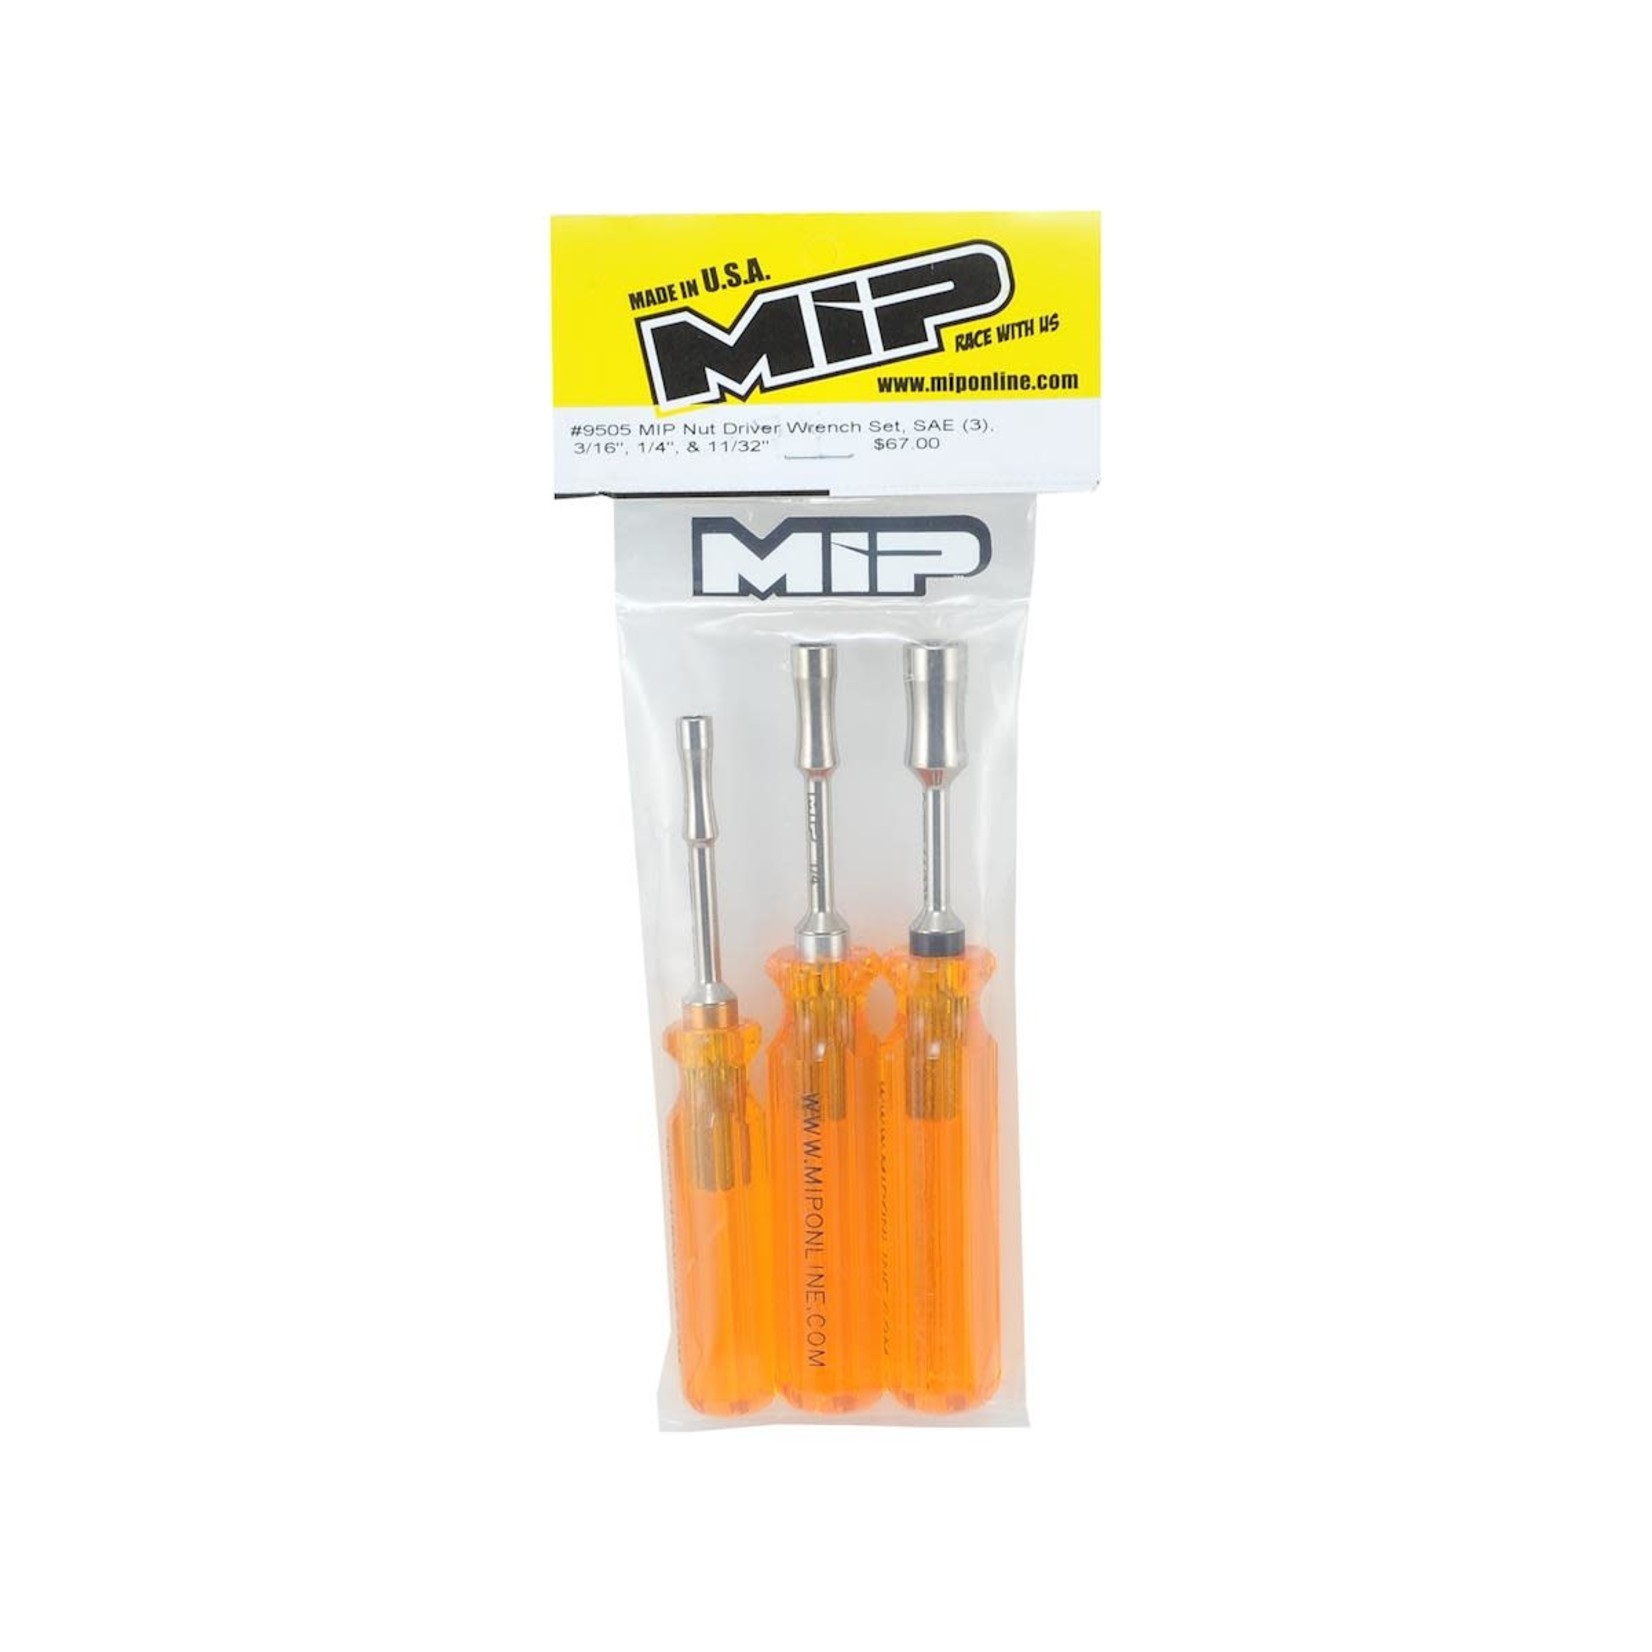 MIP MIP Standard Nut Driver Wrench Set (3) #9505